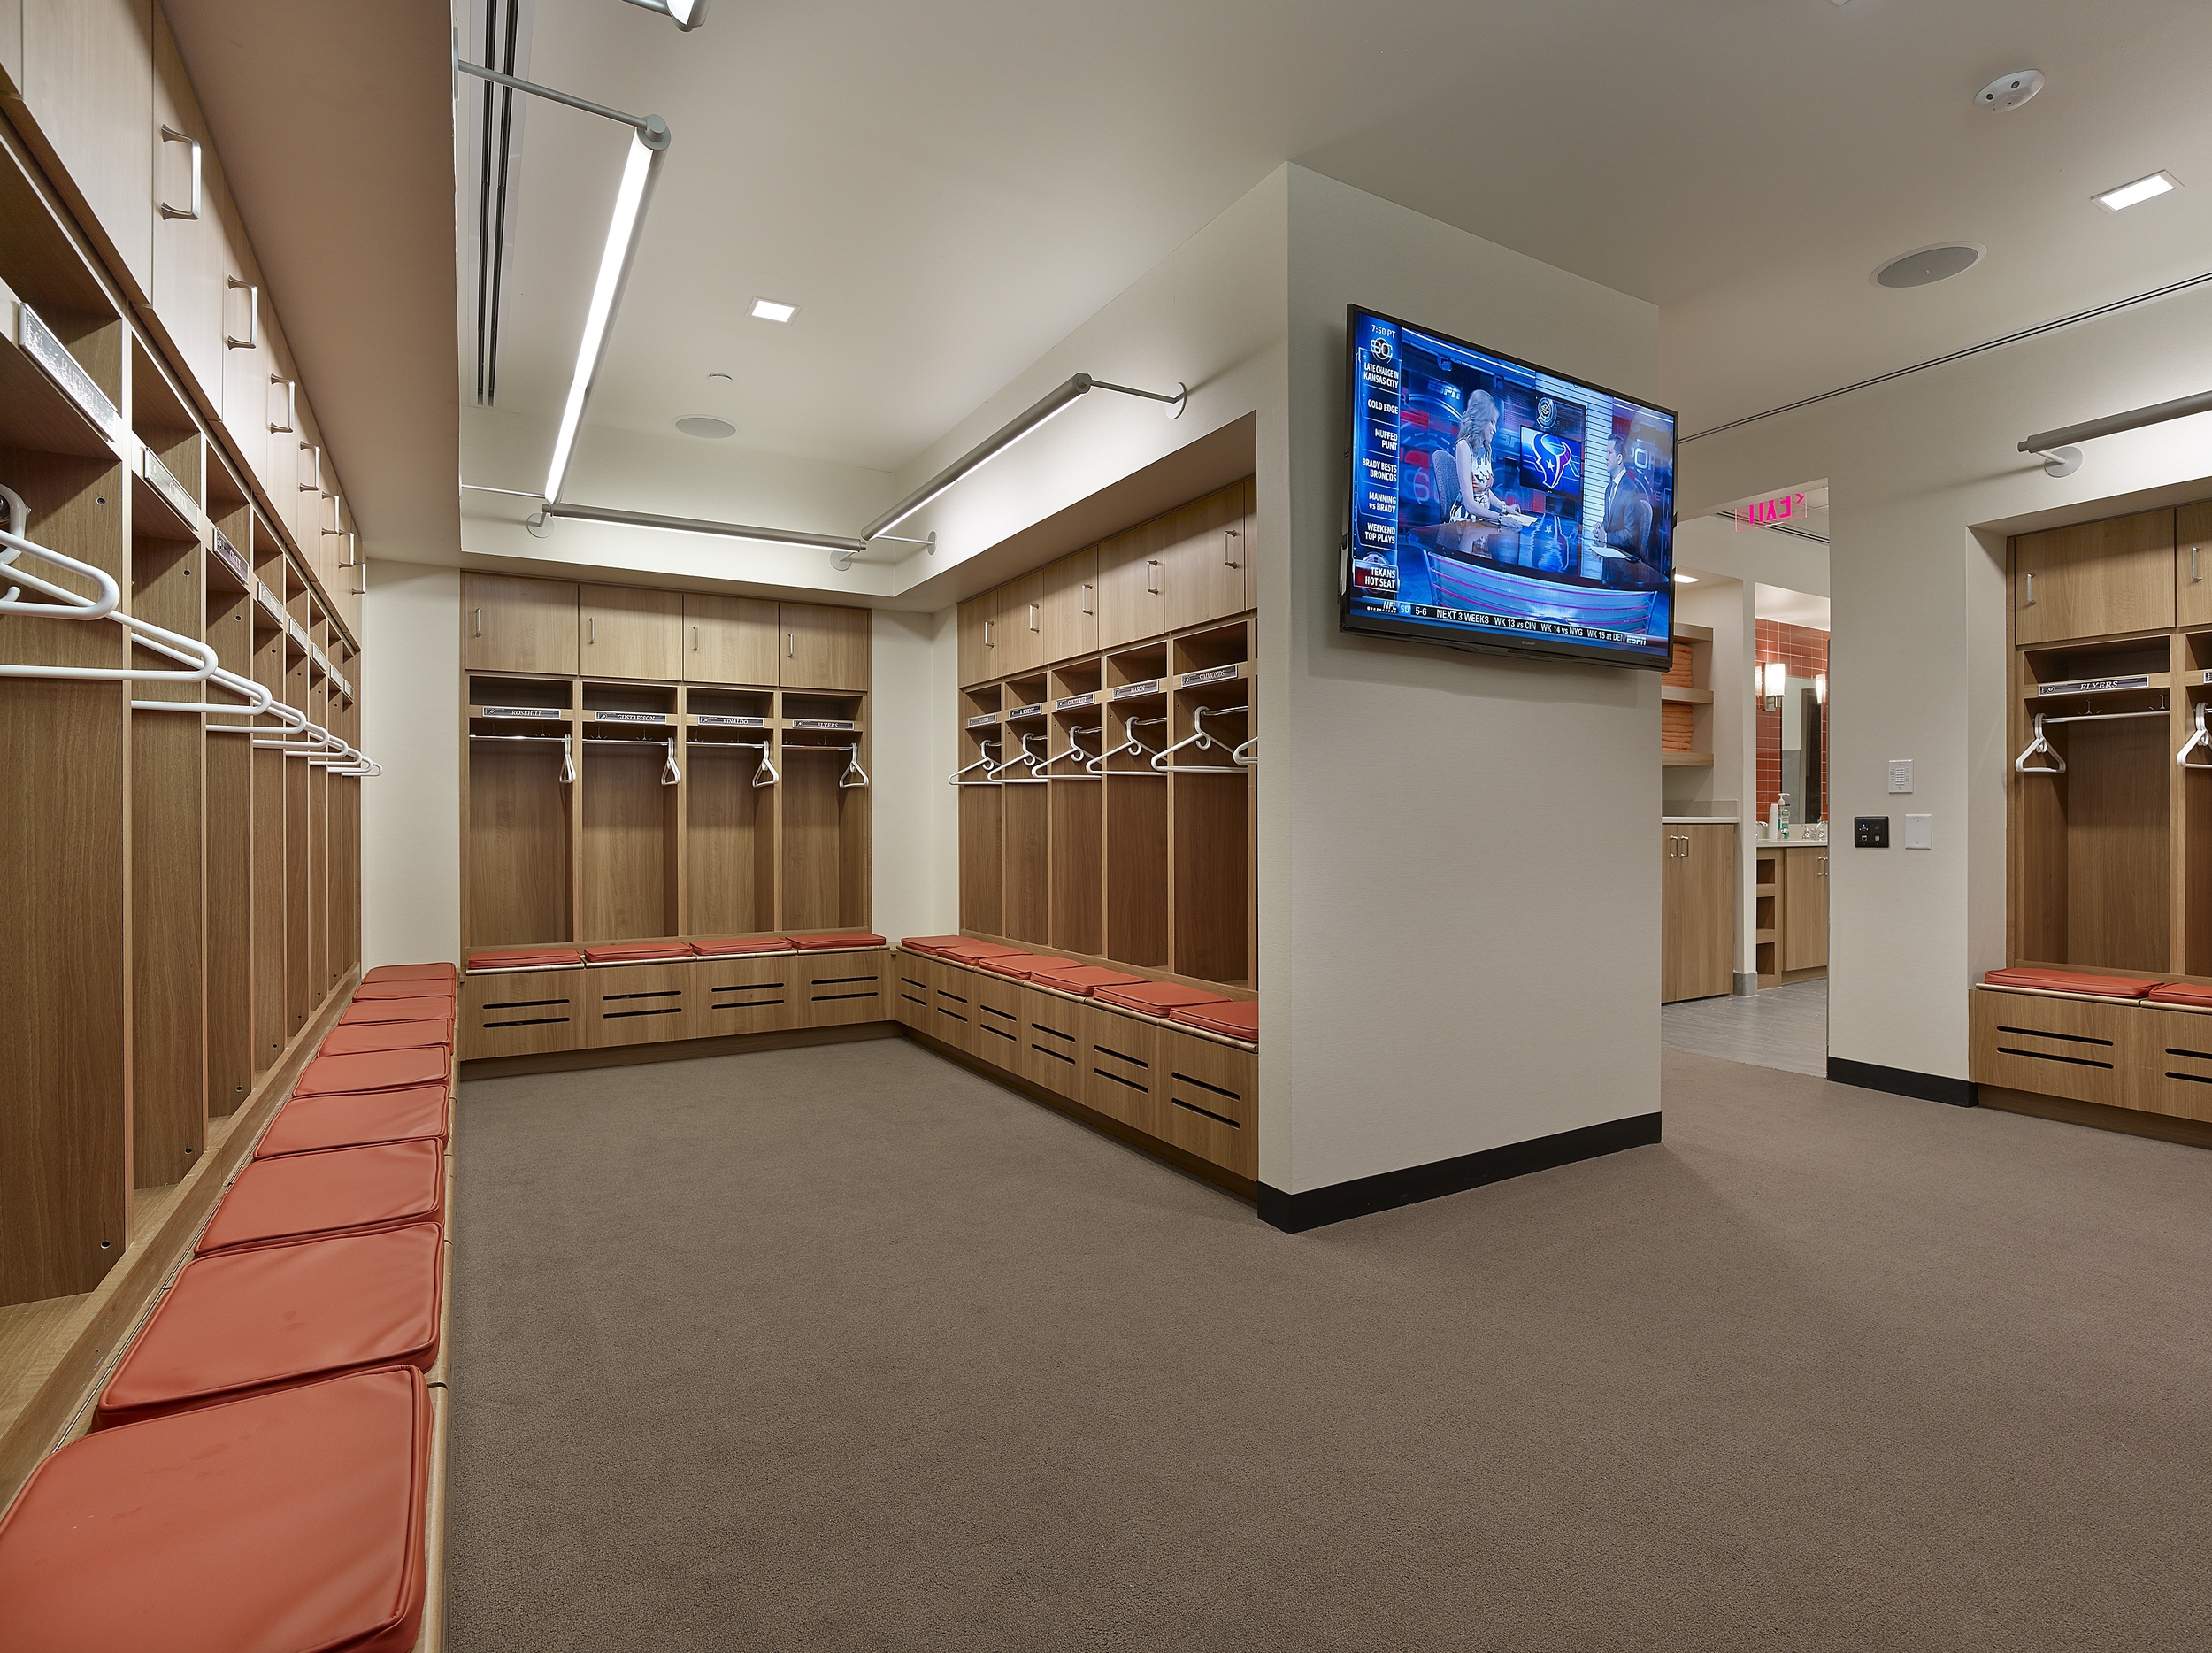 The interior of the Philadelphia Flyers locker room is shown prior